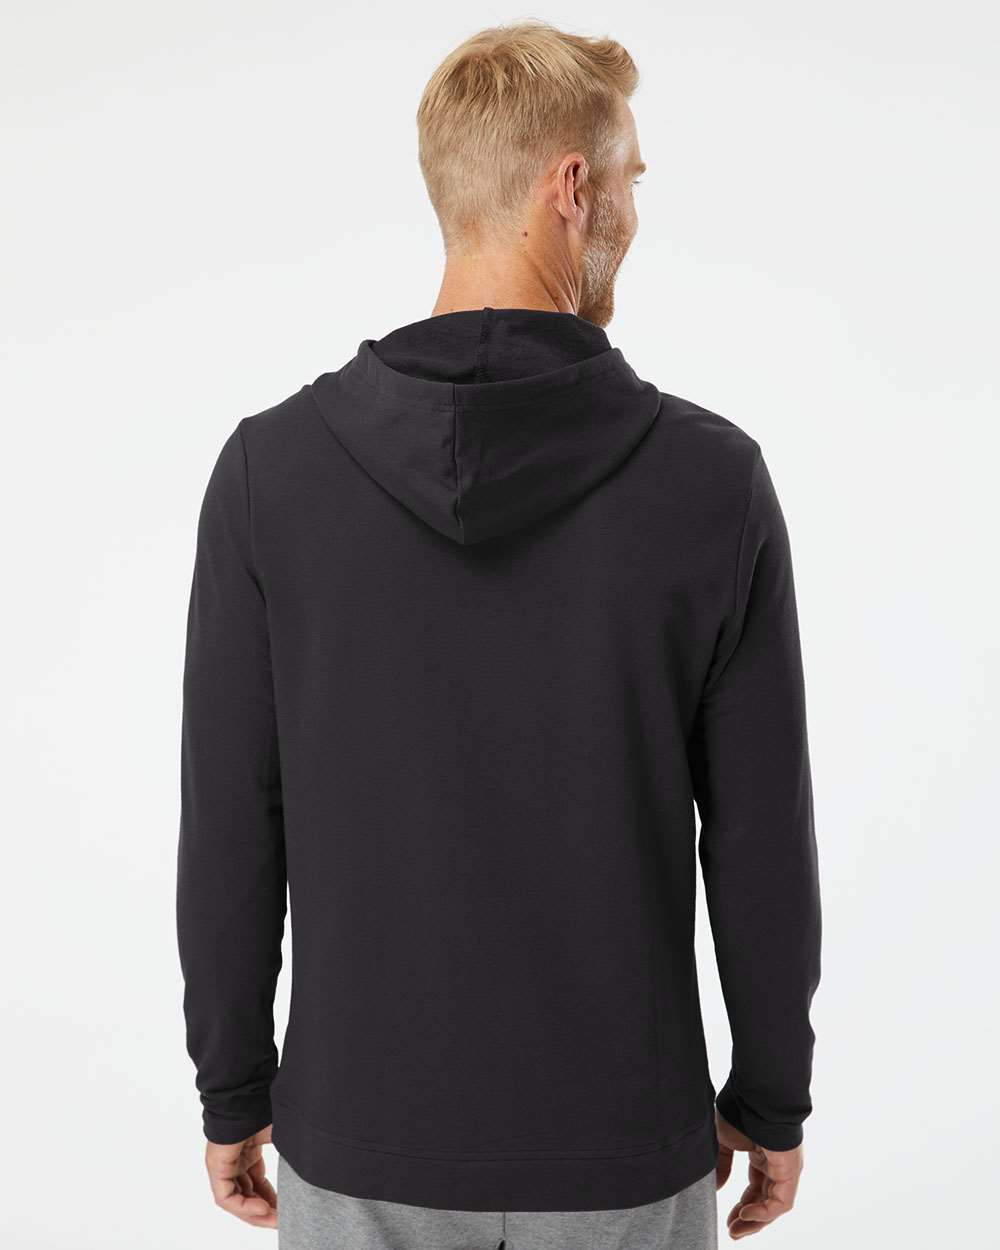 Adidas A450 Lightweight Hooded Sweatshirt #colormdl_Black